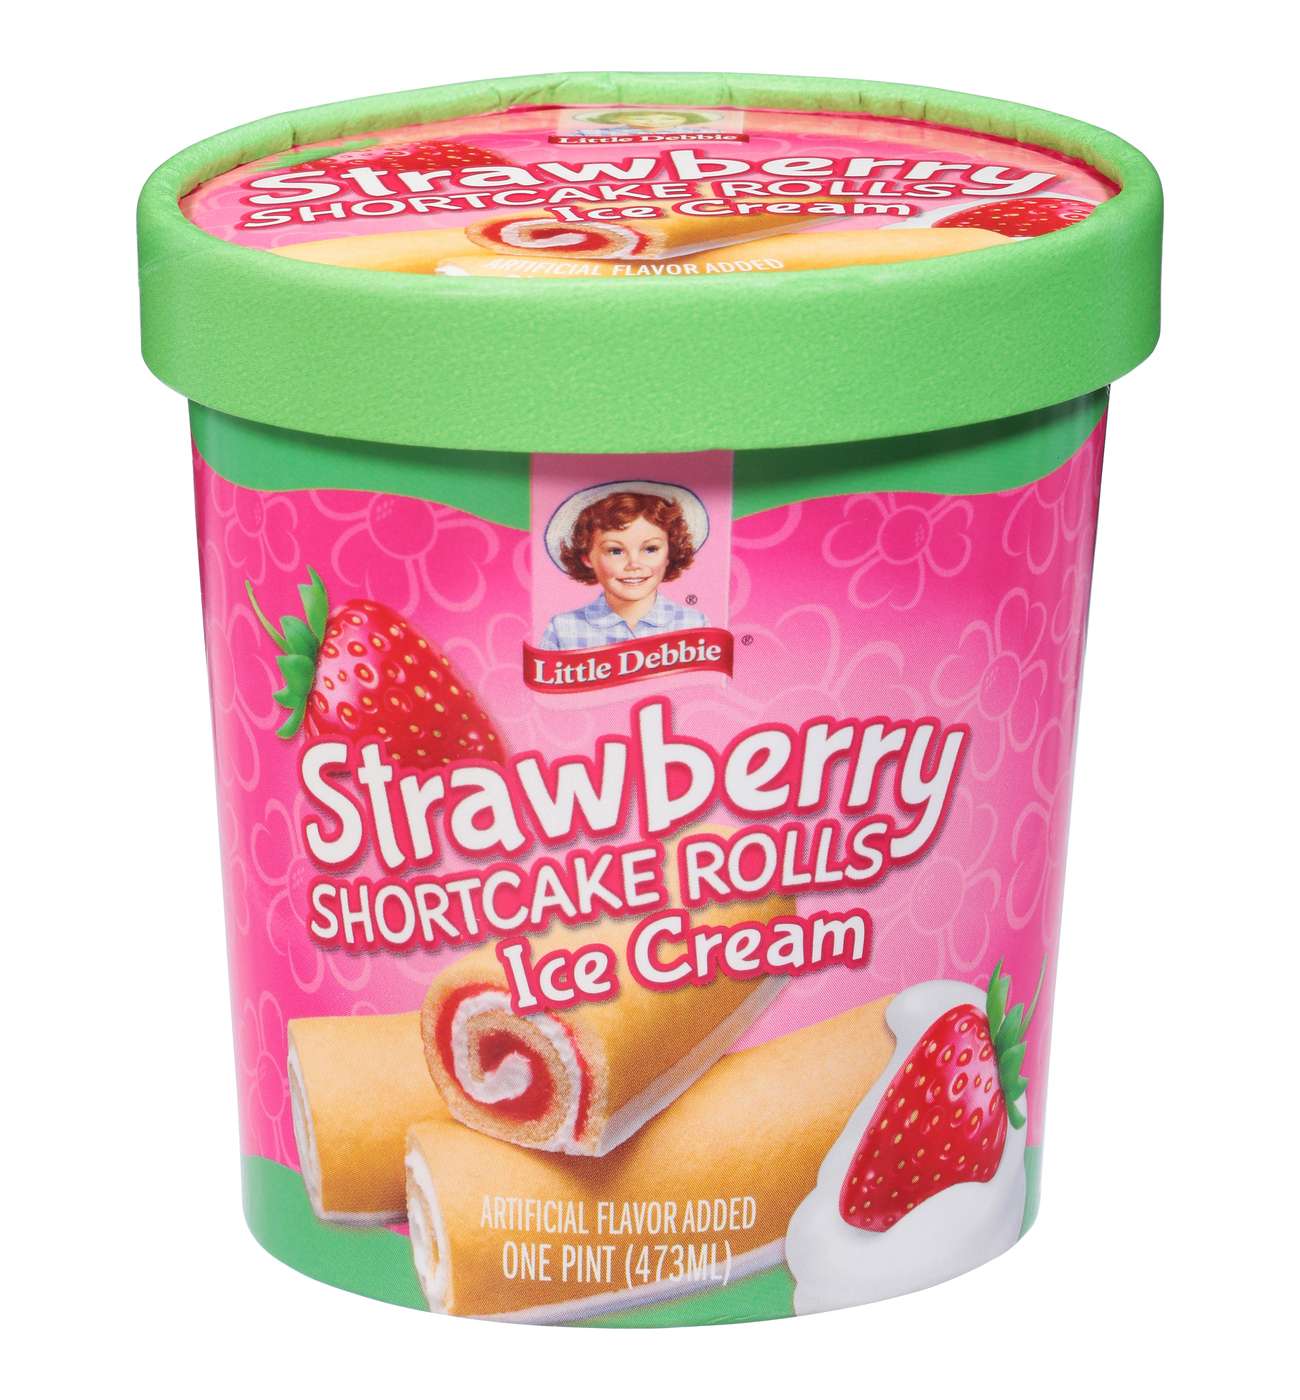 Little Debbie Strawberry Shortcake Rolls Ice Cream Pint; image 1 of 2